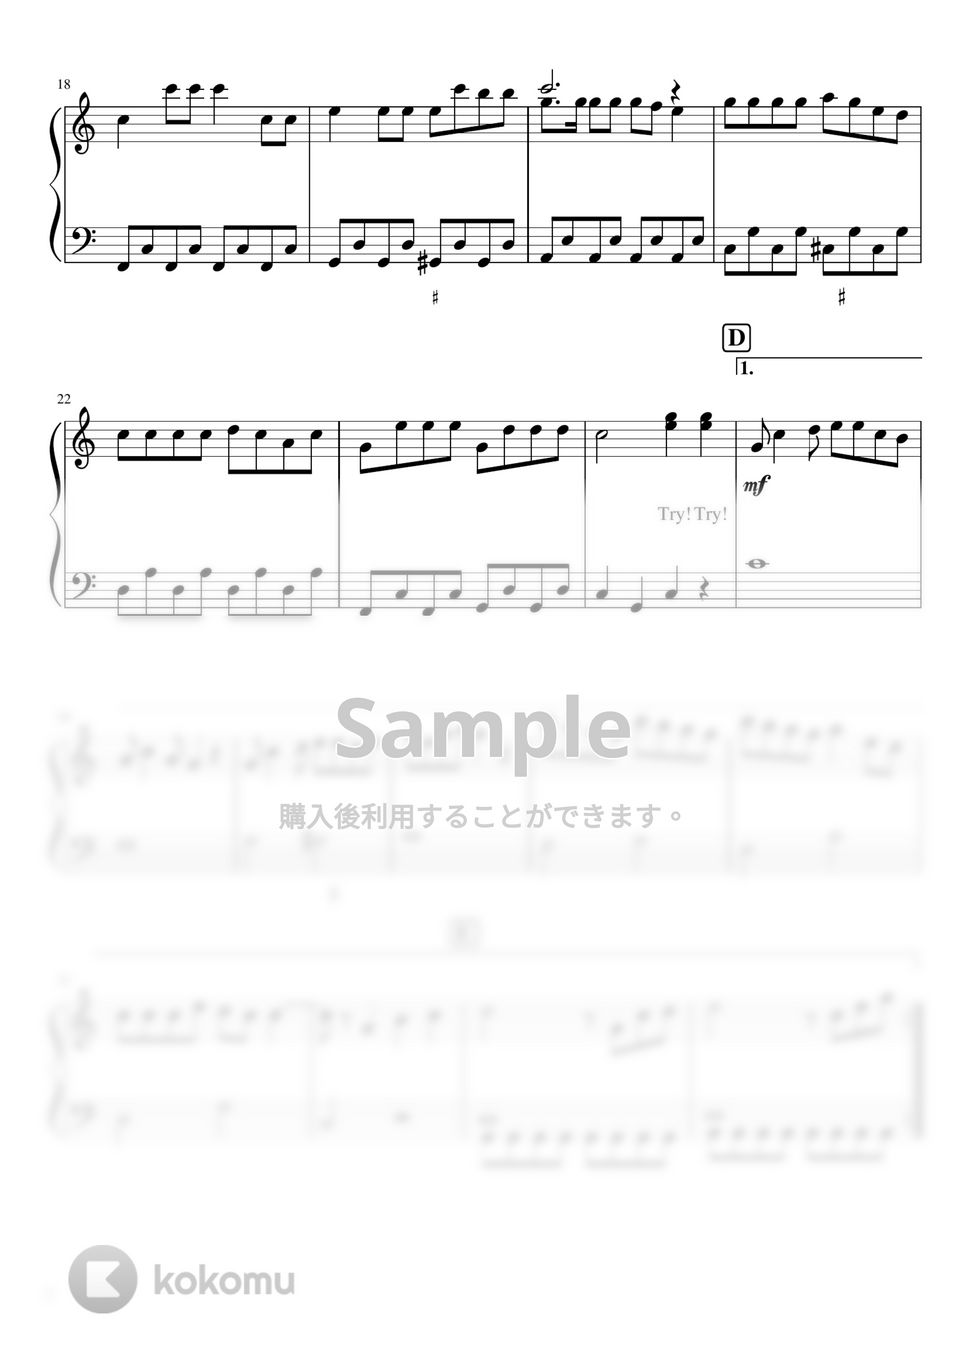 WANIMA - やってみよう (ソロ / 初級 / 歌詞付き / コード付き / 階名 / 三太郎 / au / レッスン) by orinpia music